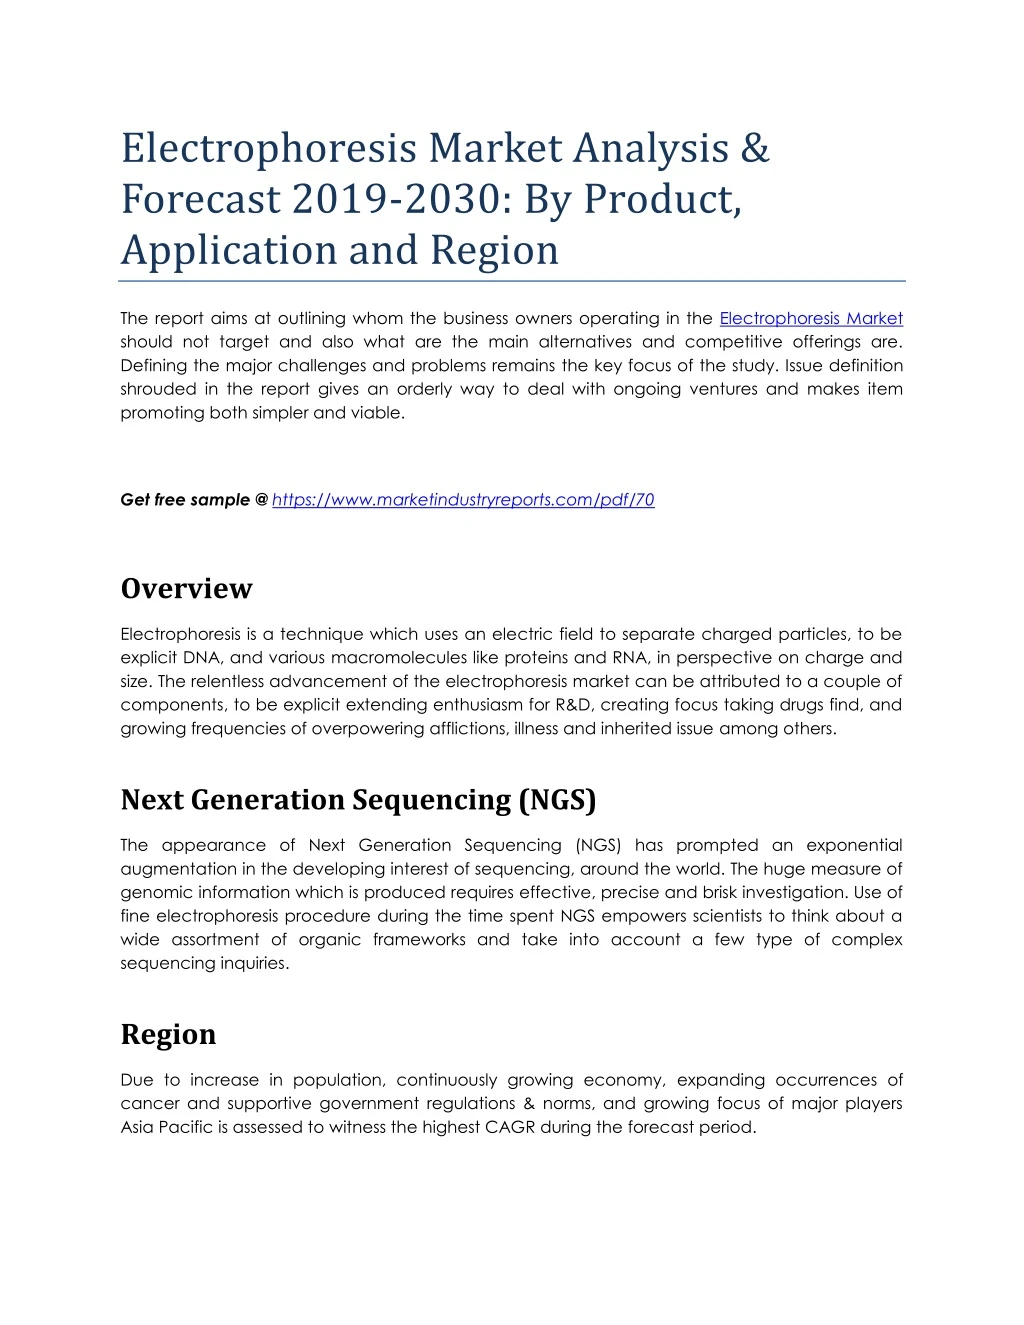 electrophoresis market analysis forecast 2019